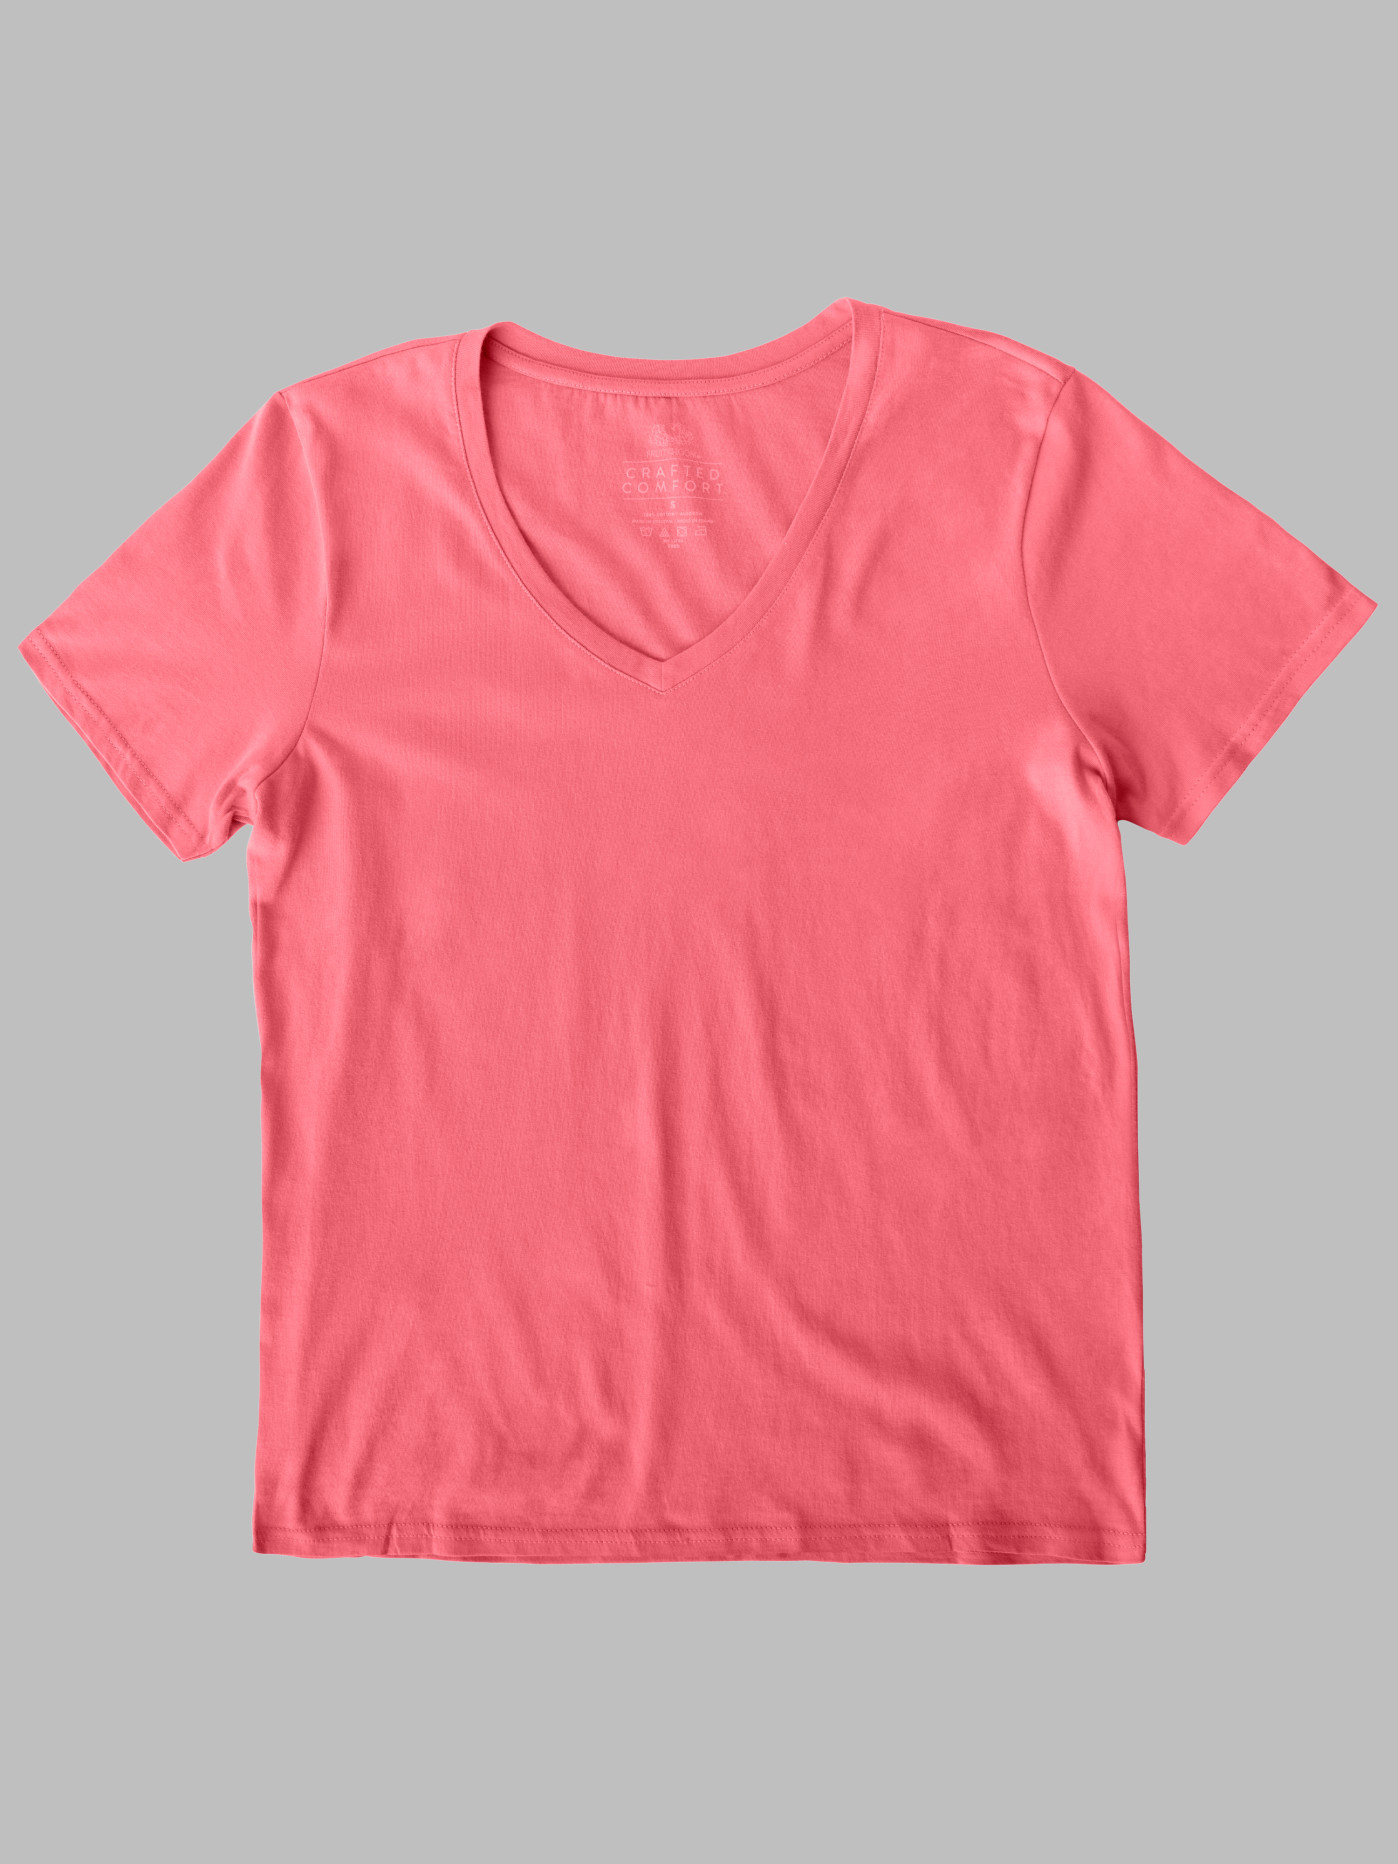 Women's Soft Supima Cotton Short Sleeve Everyday Comfy Crew Tee | Bright  Light Pink